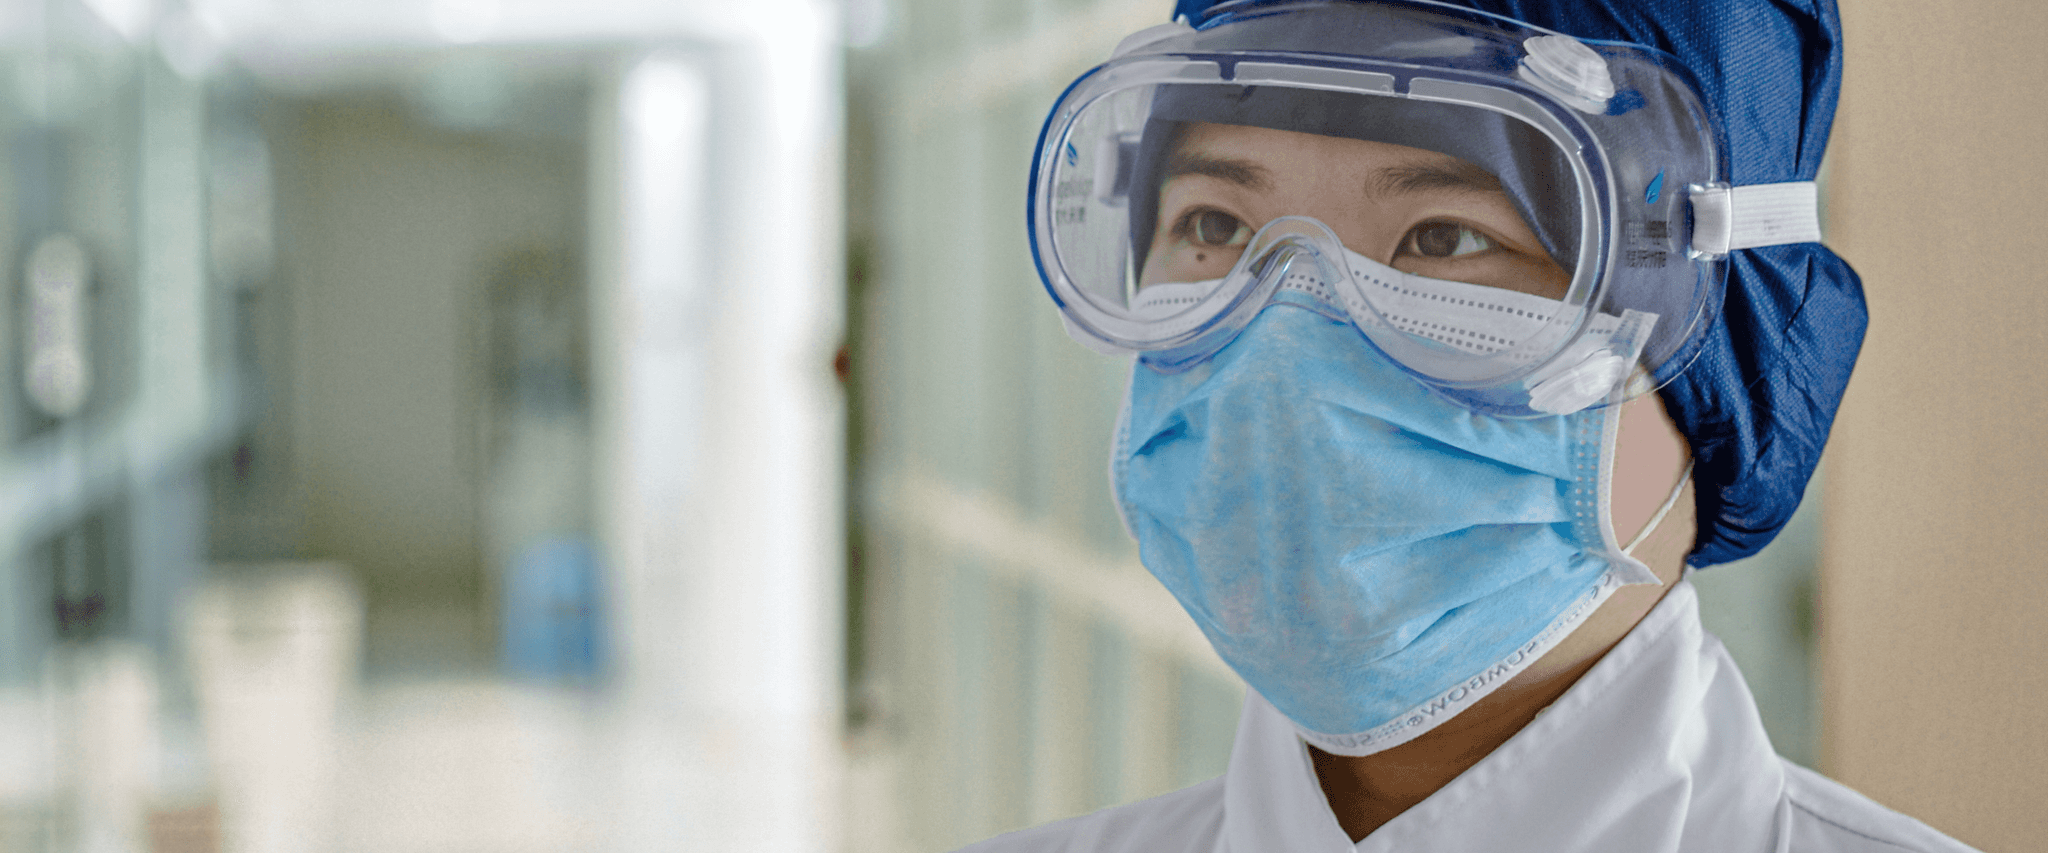 Gafas Sector Sanitario & Laboratorio | Safeguru